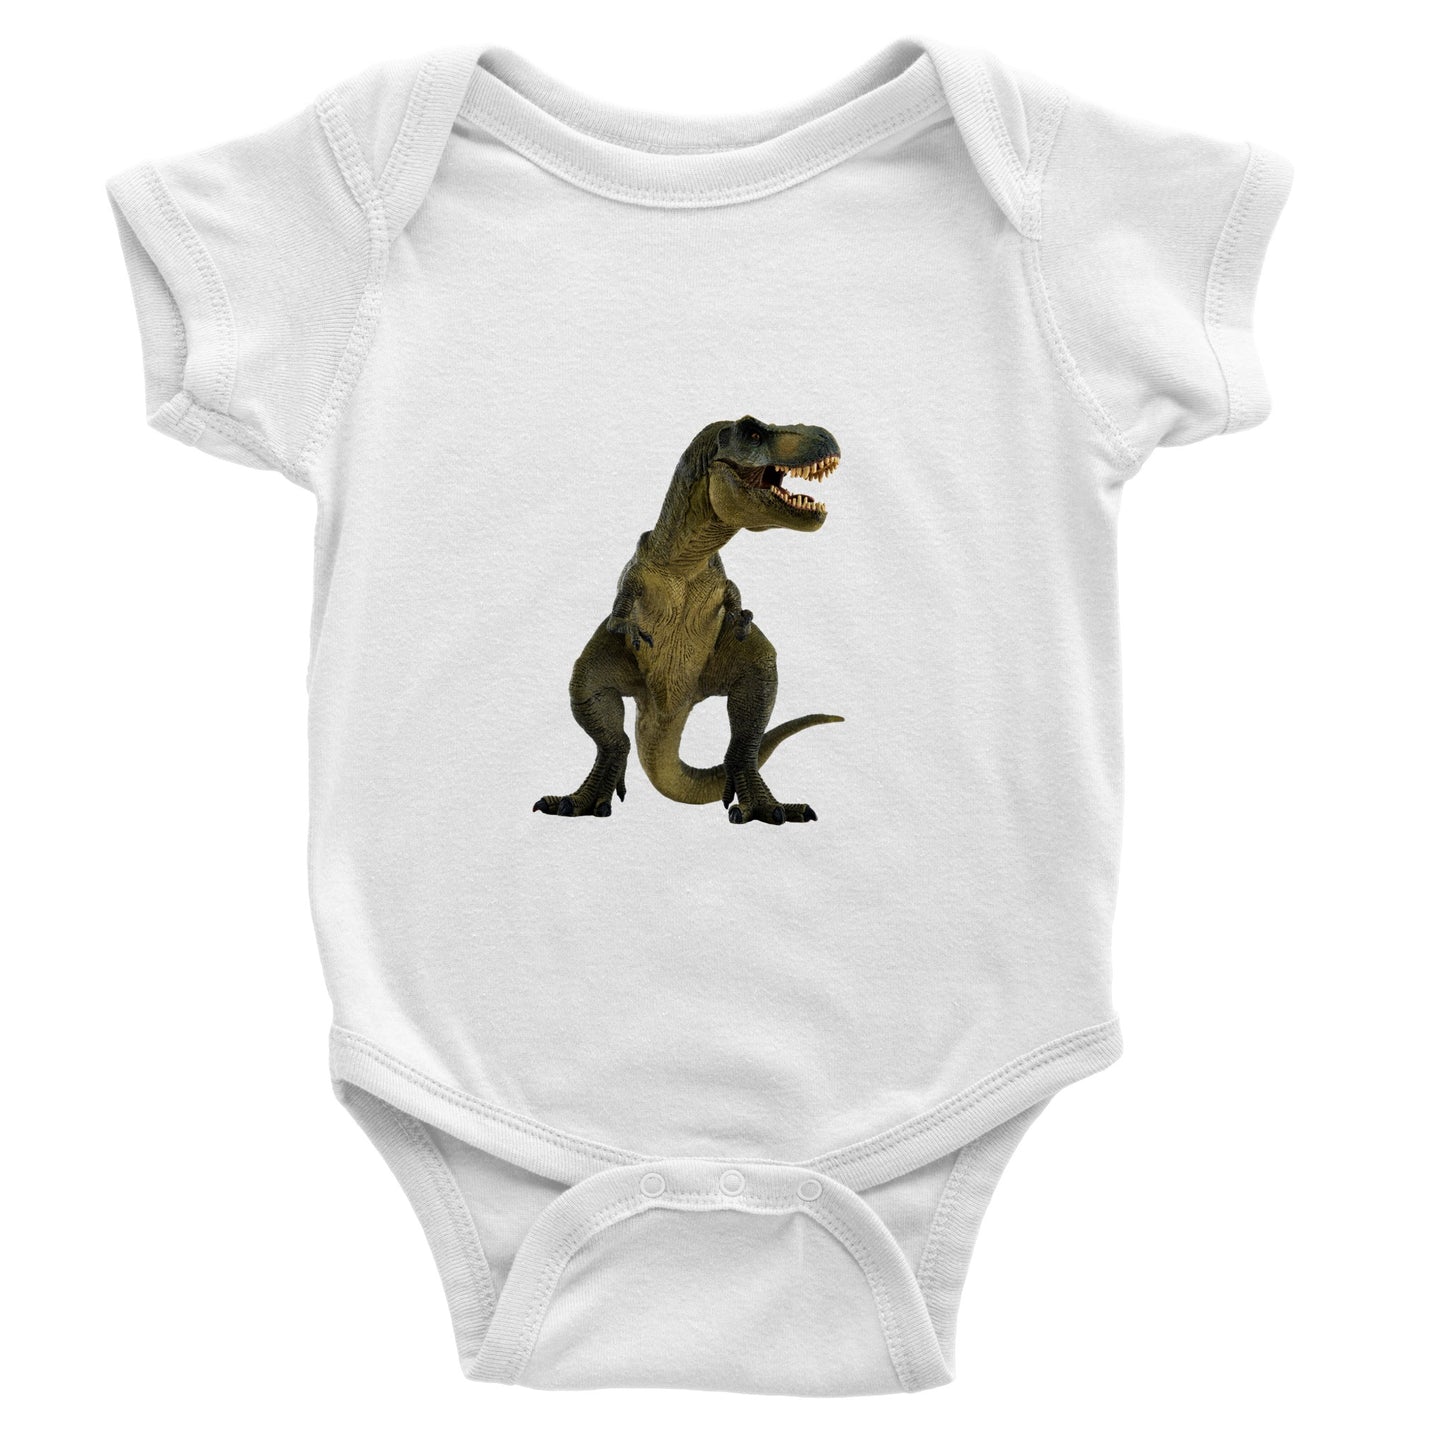 Organic cotton baby bodysuit/Dinosaur - Classic